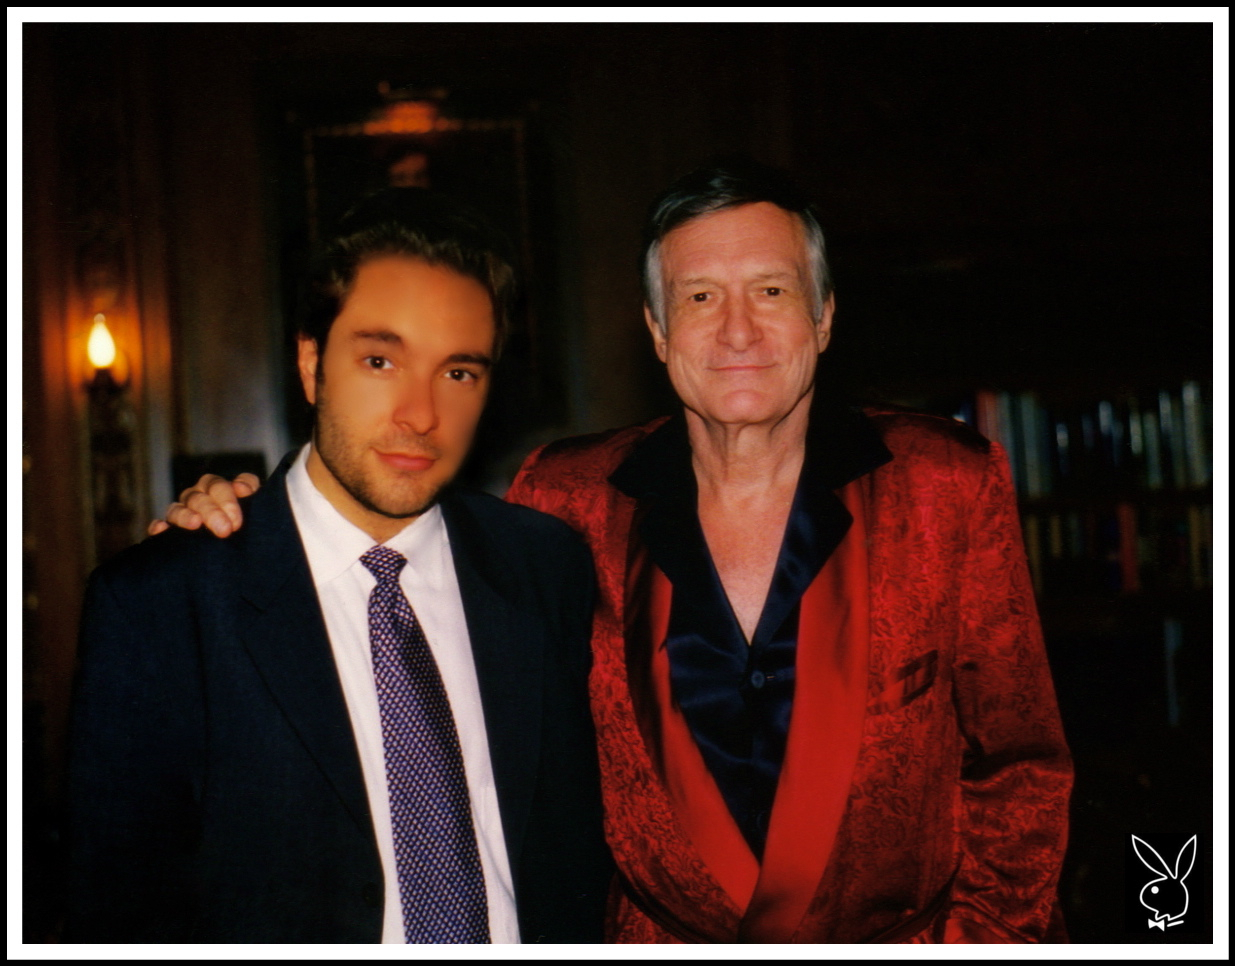 Hugh Hefner and David Giammarco, Playboy Mansion West. Holmby Hills, California.